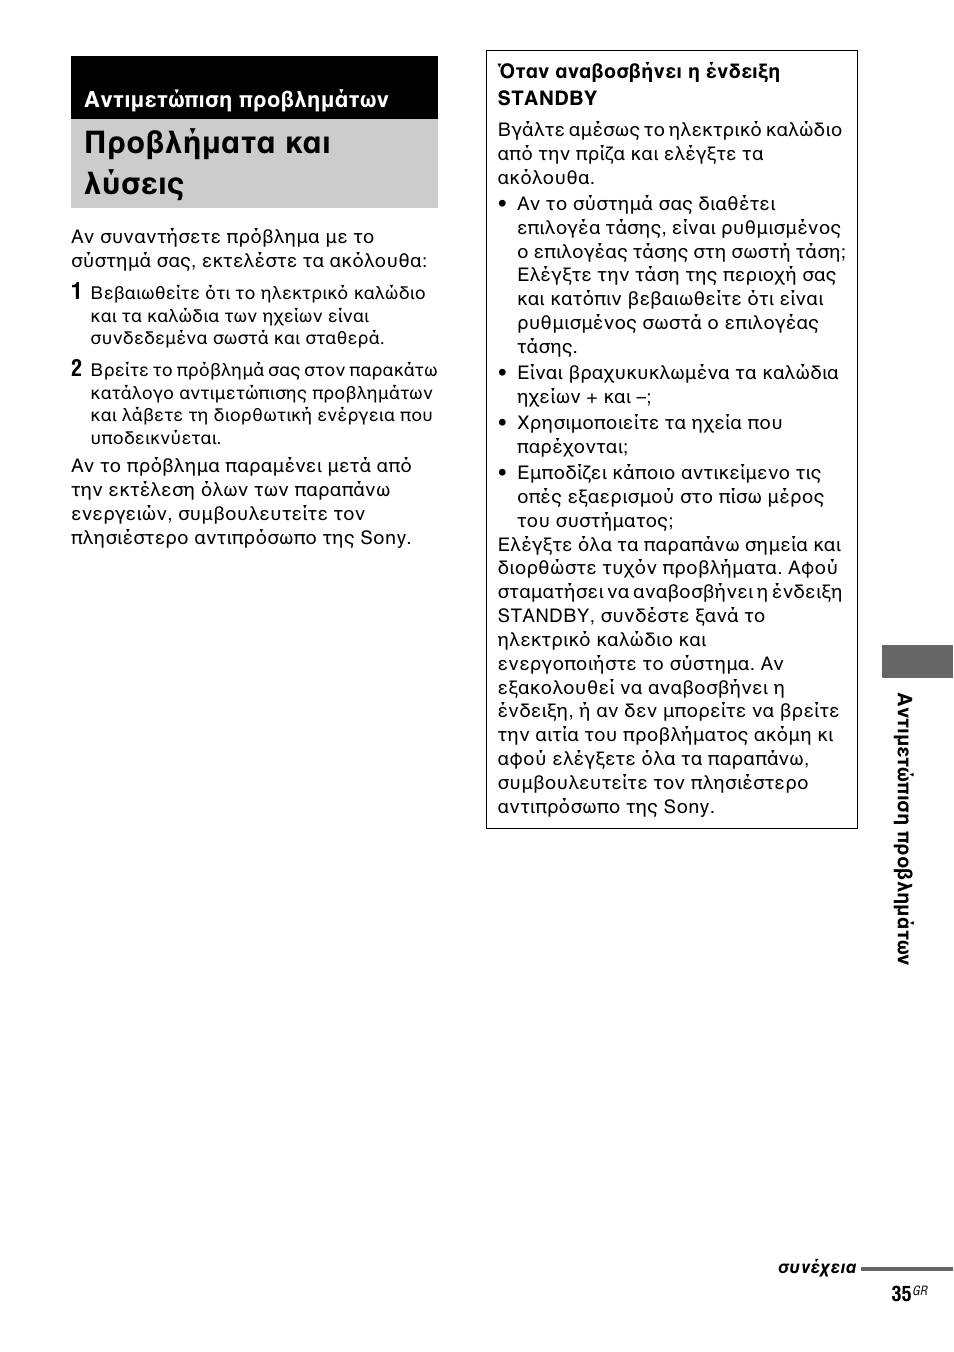 Бнфймеф ²йуз ²спвлзмьфщн, Гспвлчмбфб кбй лжуейт, Αντιµετώπιση προβληµάτων | Προβλήµατα και λύσεις | Инструкция по эксплуатации Sony CMT-CPZ1 | Страница 35 / 92